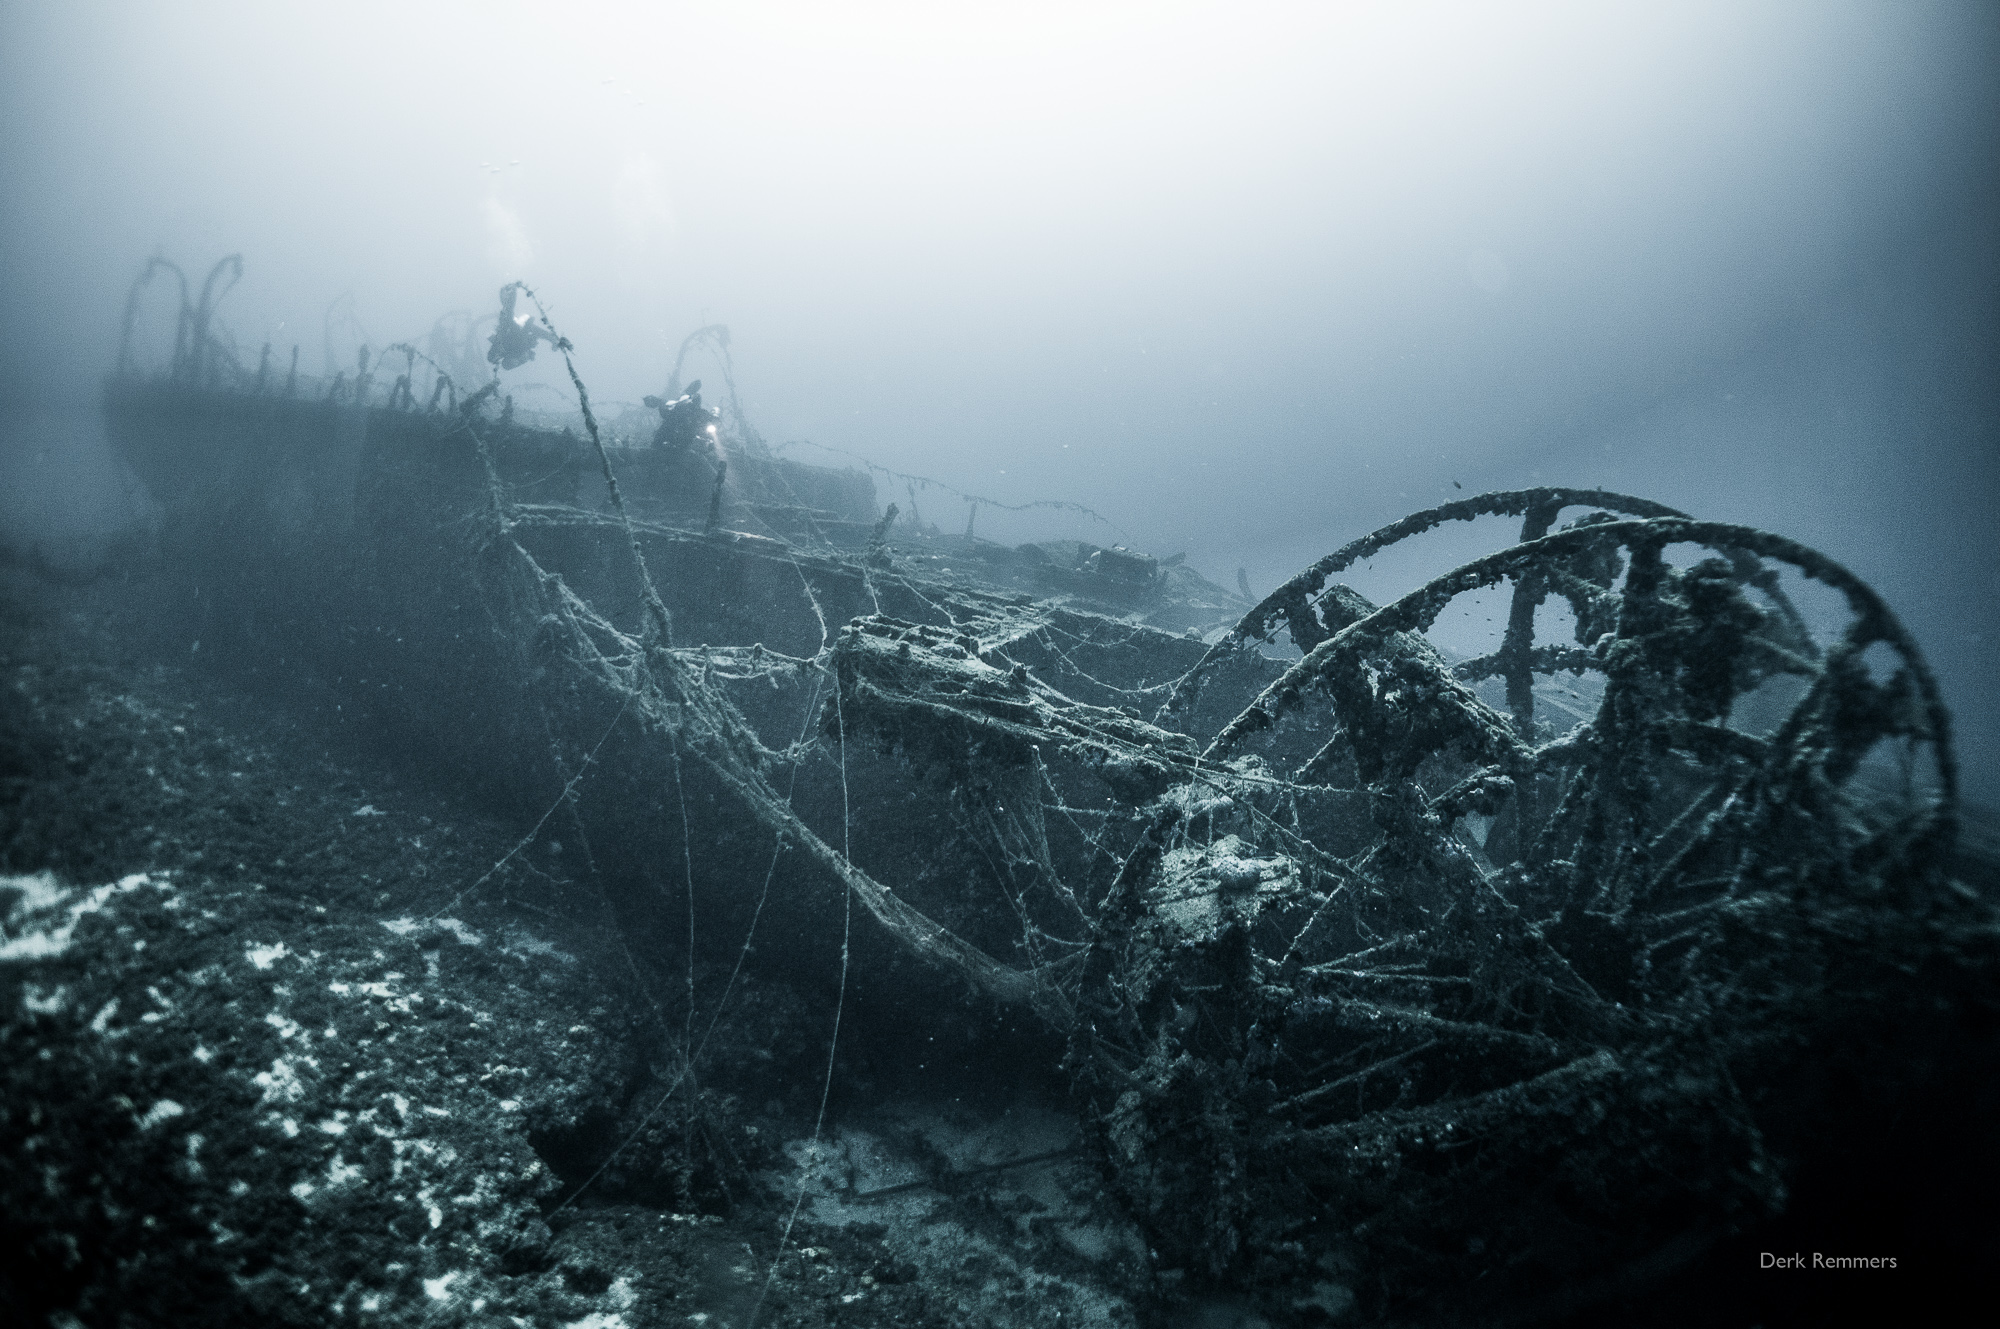 kea-opens-spectacular-wreck-dive-sites1